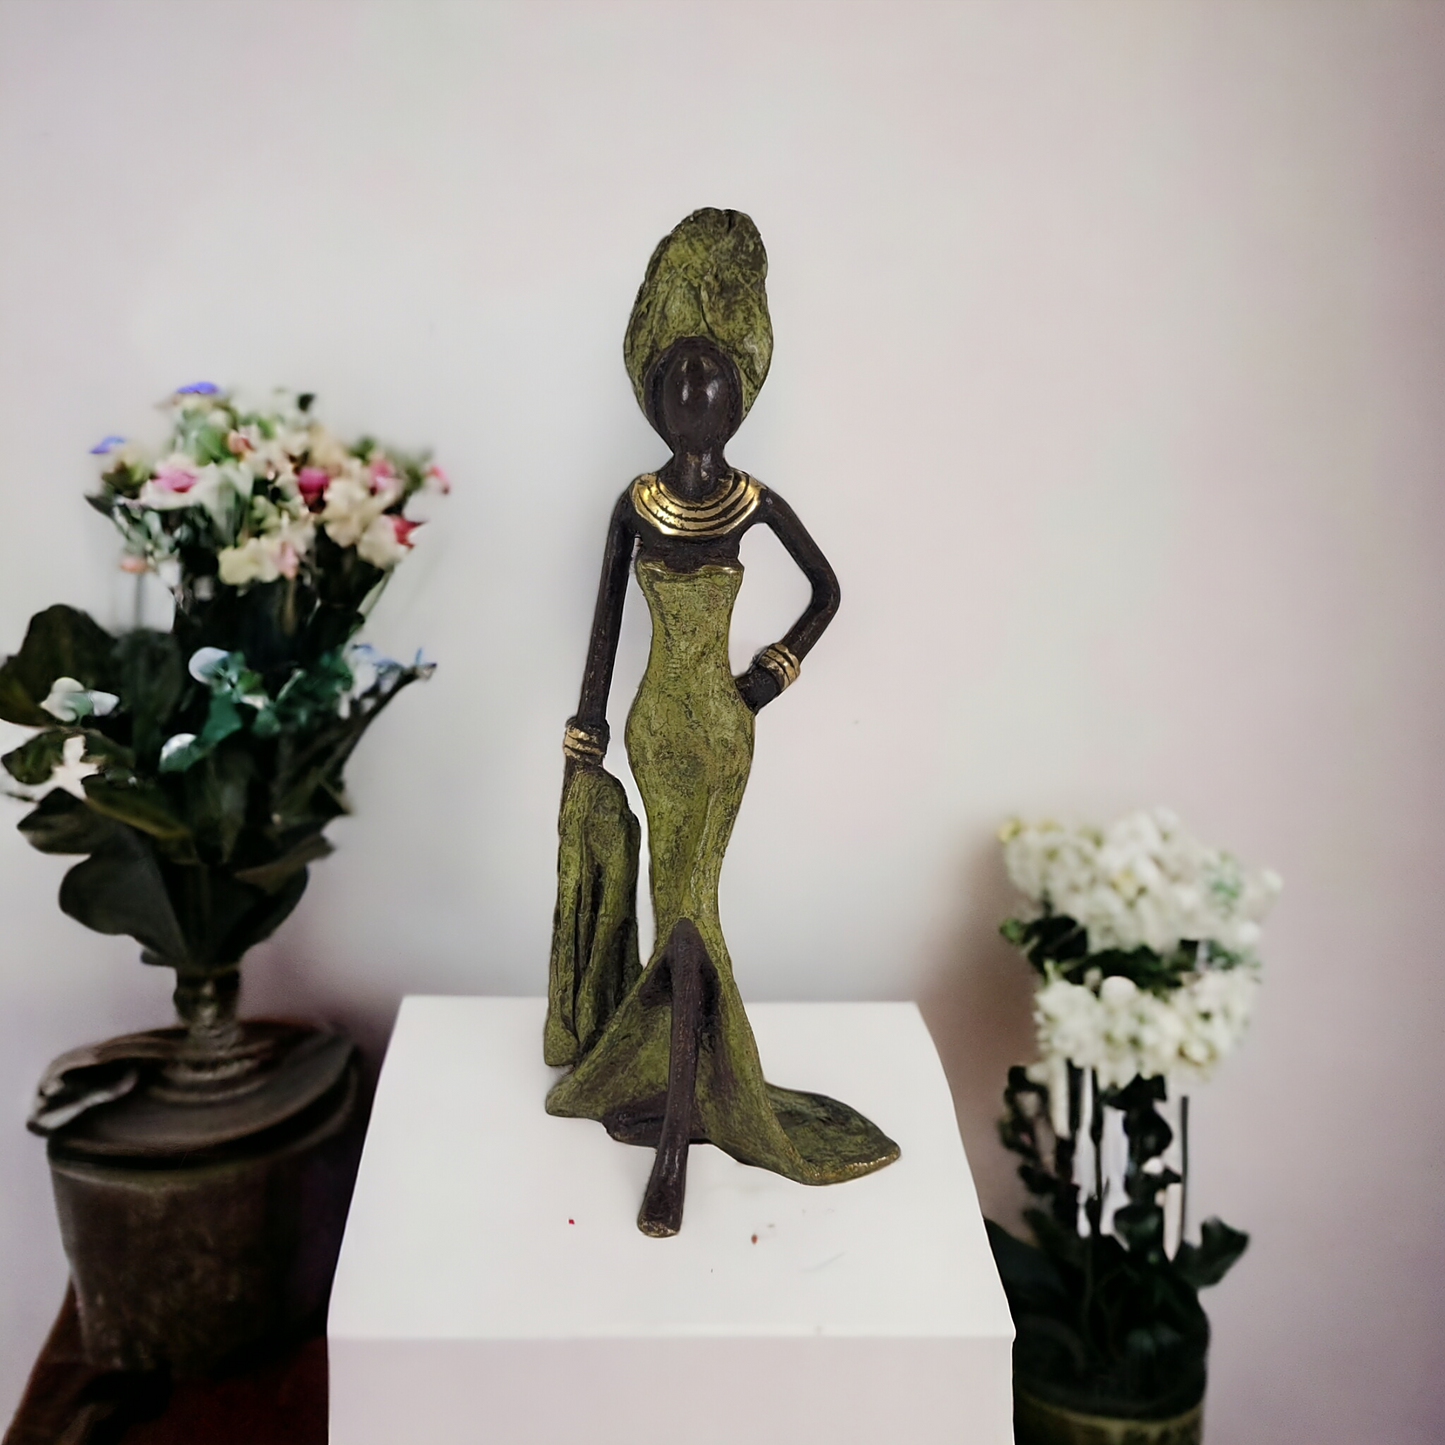 Bronze-Skulptur "Femme élégante" by Soré | 17 cm | verschiedene Farben